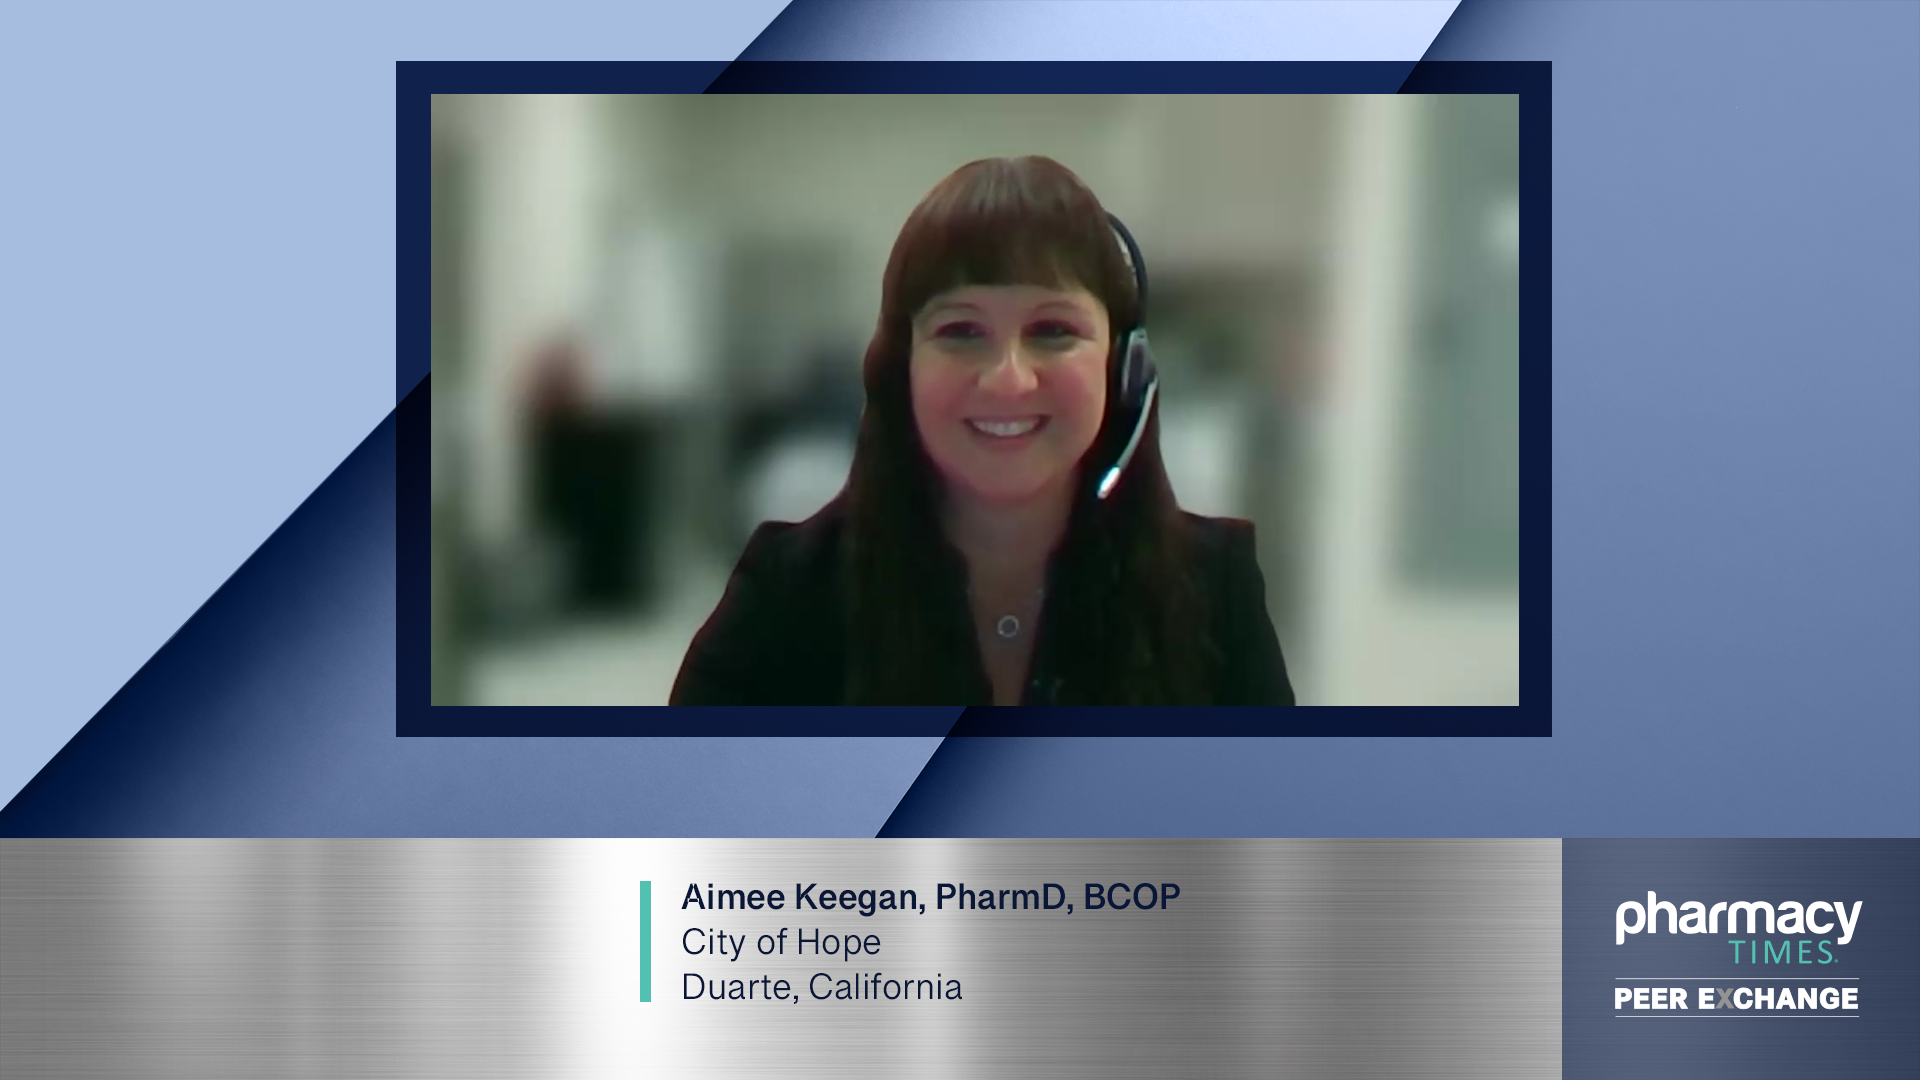 Aimee Keegan, PharmD, BCOP, a clinical pharmacist